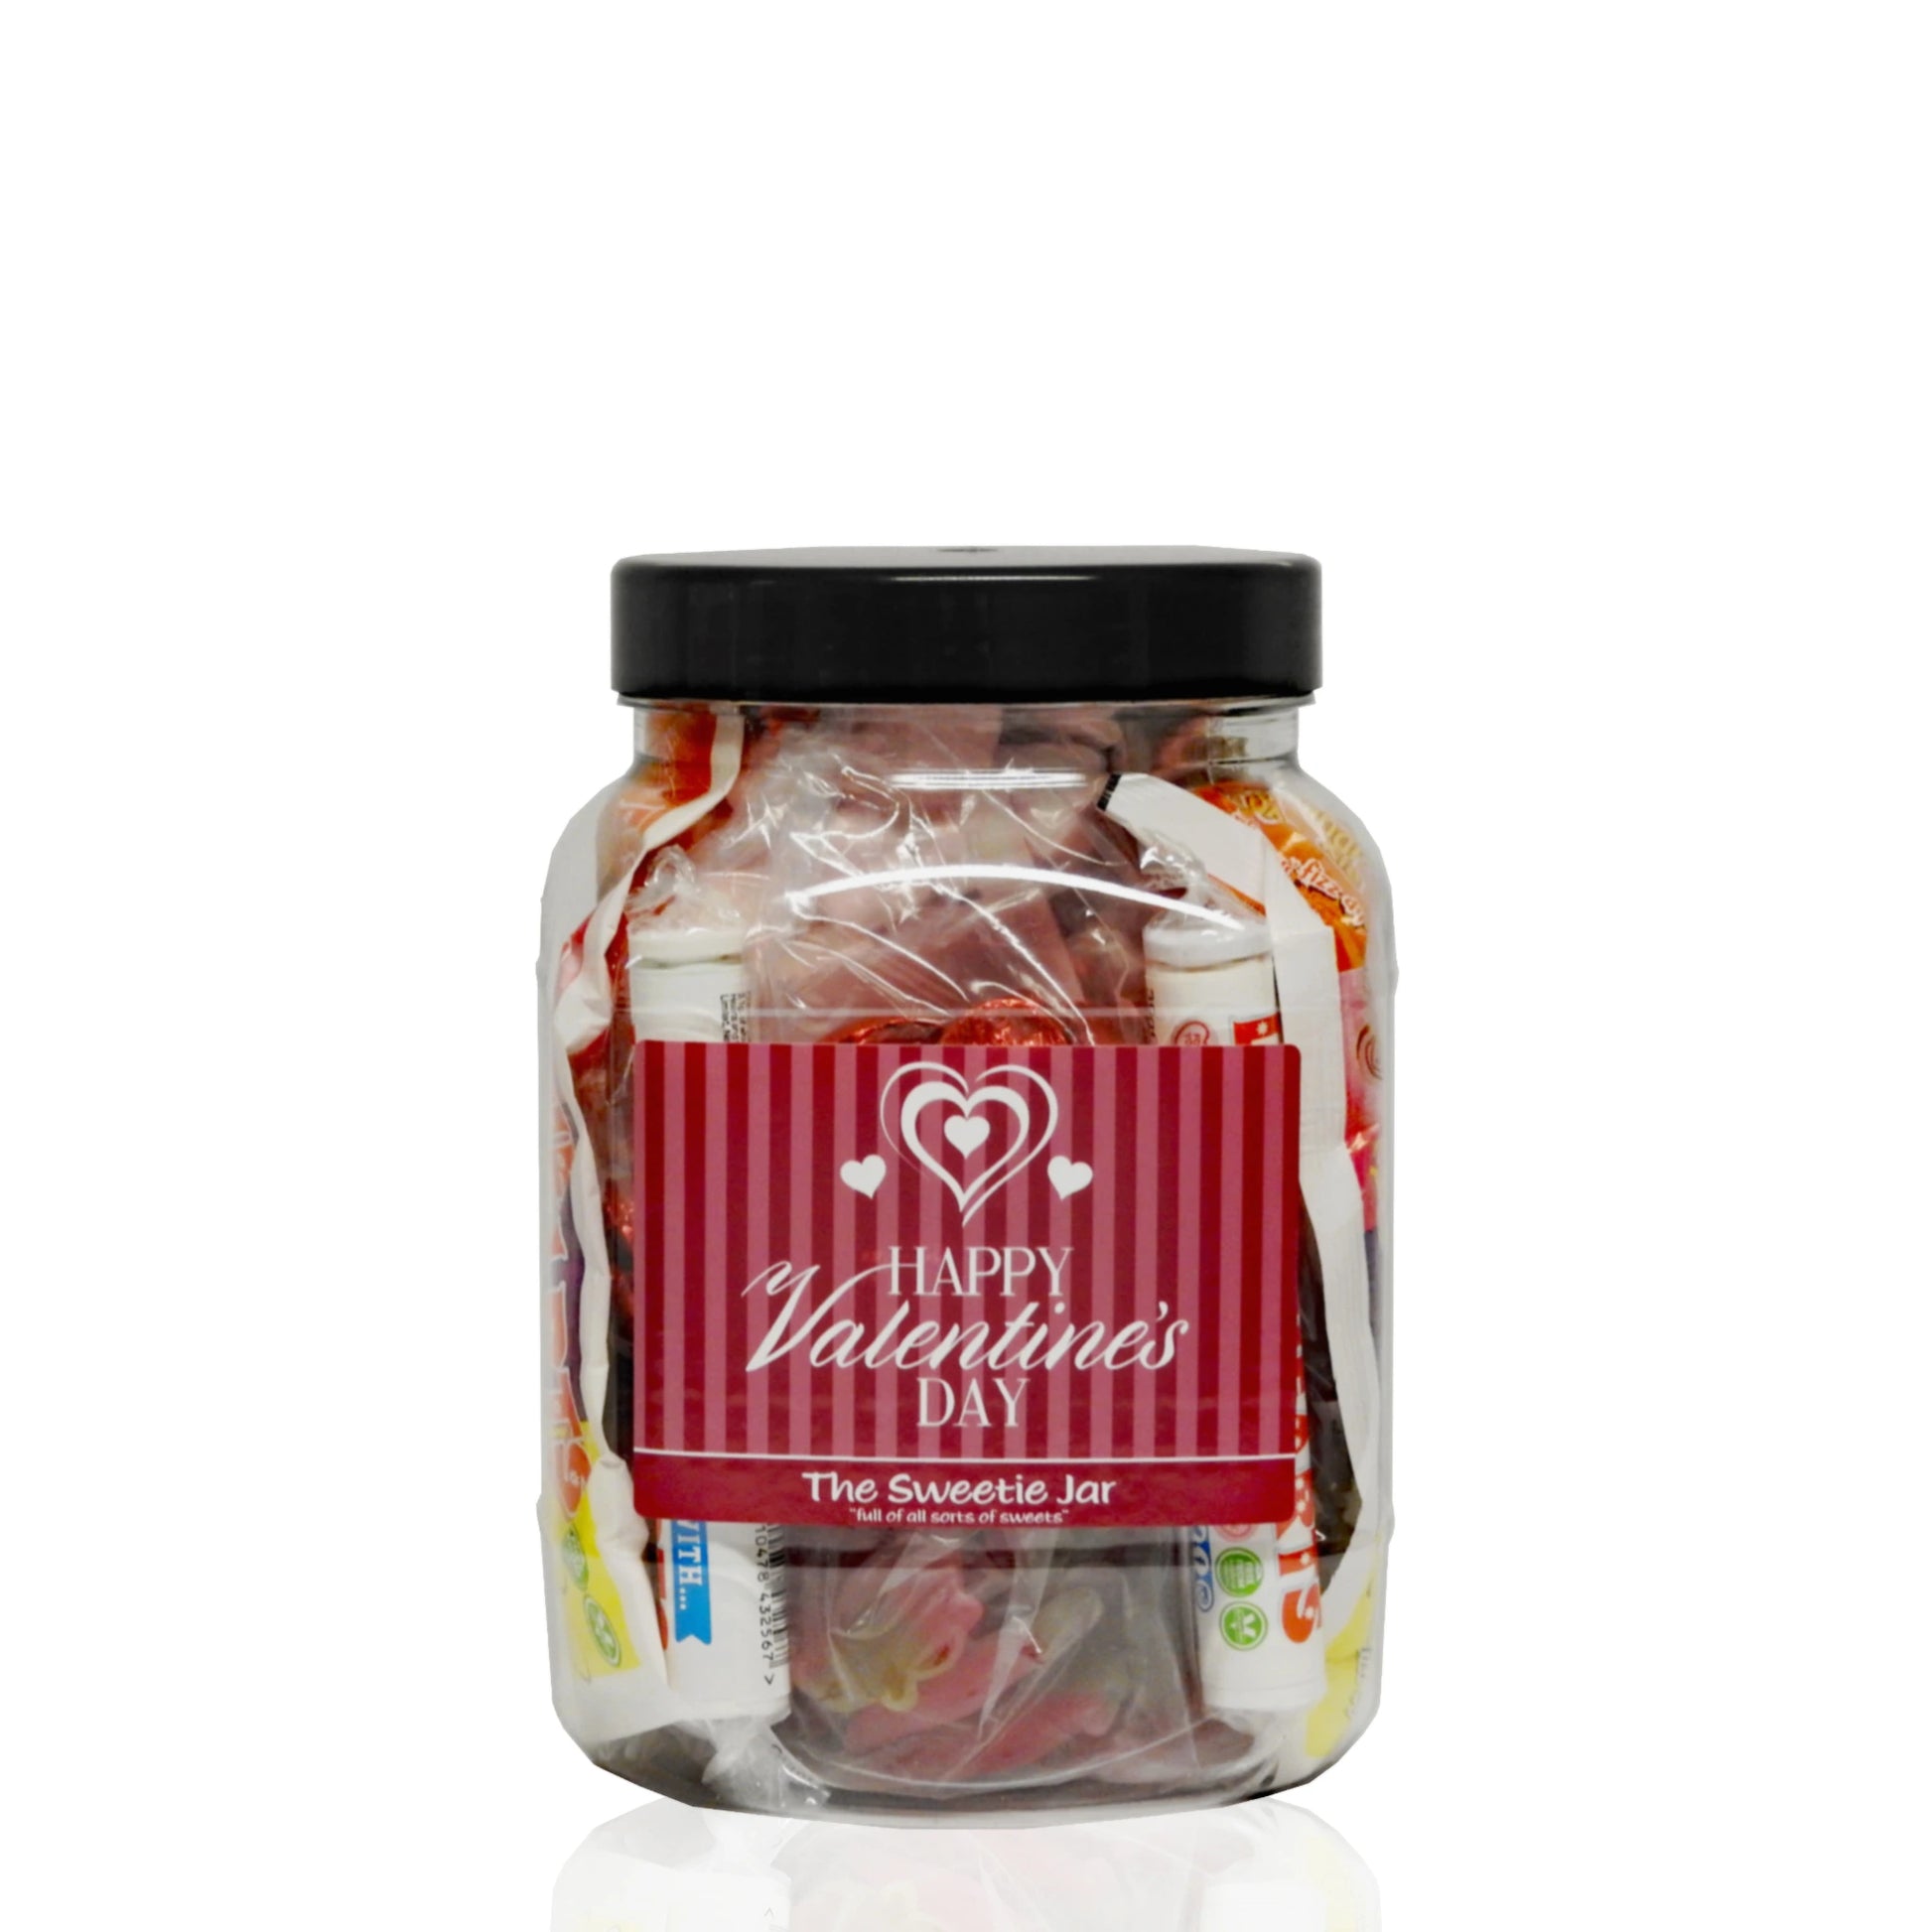 Happy Valentines Day Medium Gift Jar - Retro Sweet Jars at The Sweetie Jar